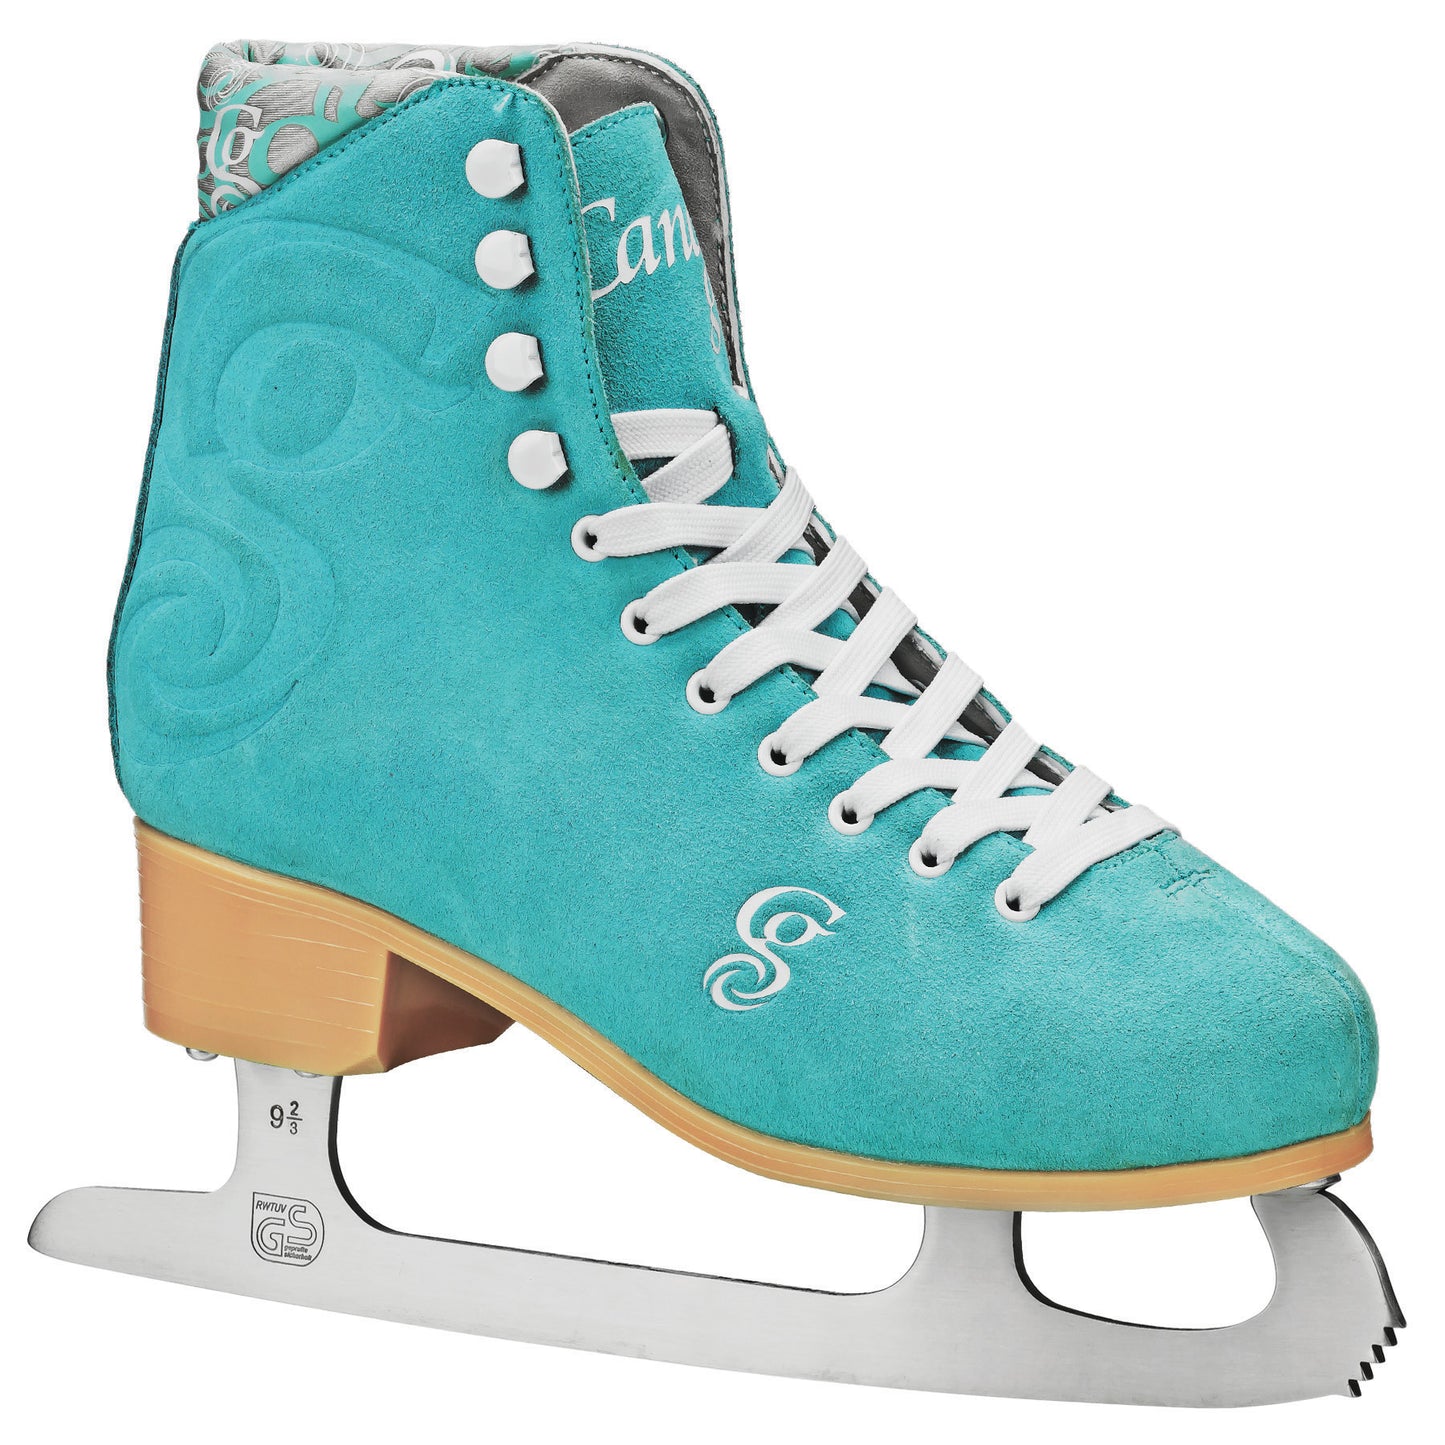 Candi Grl Carlin Women's Ice Skates